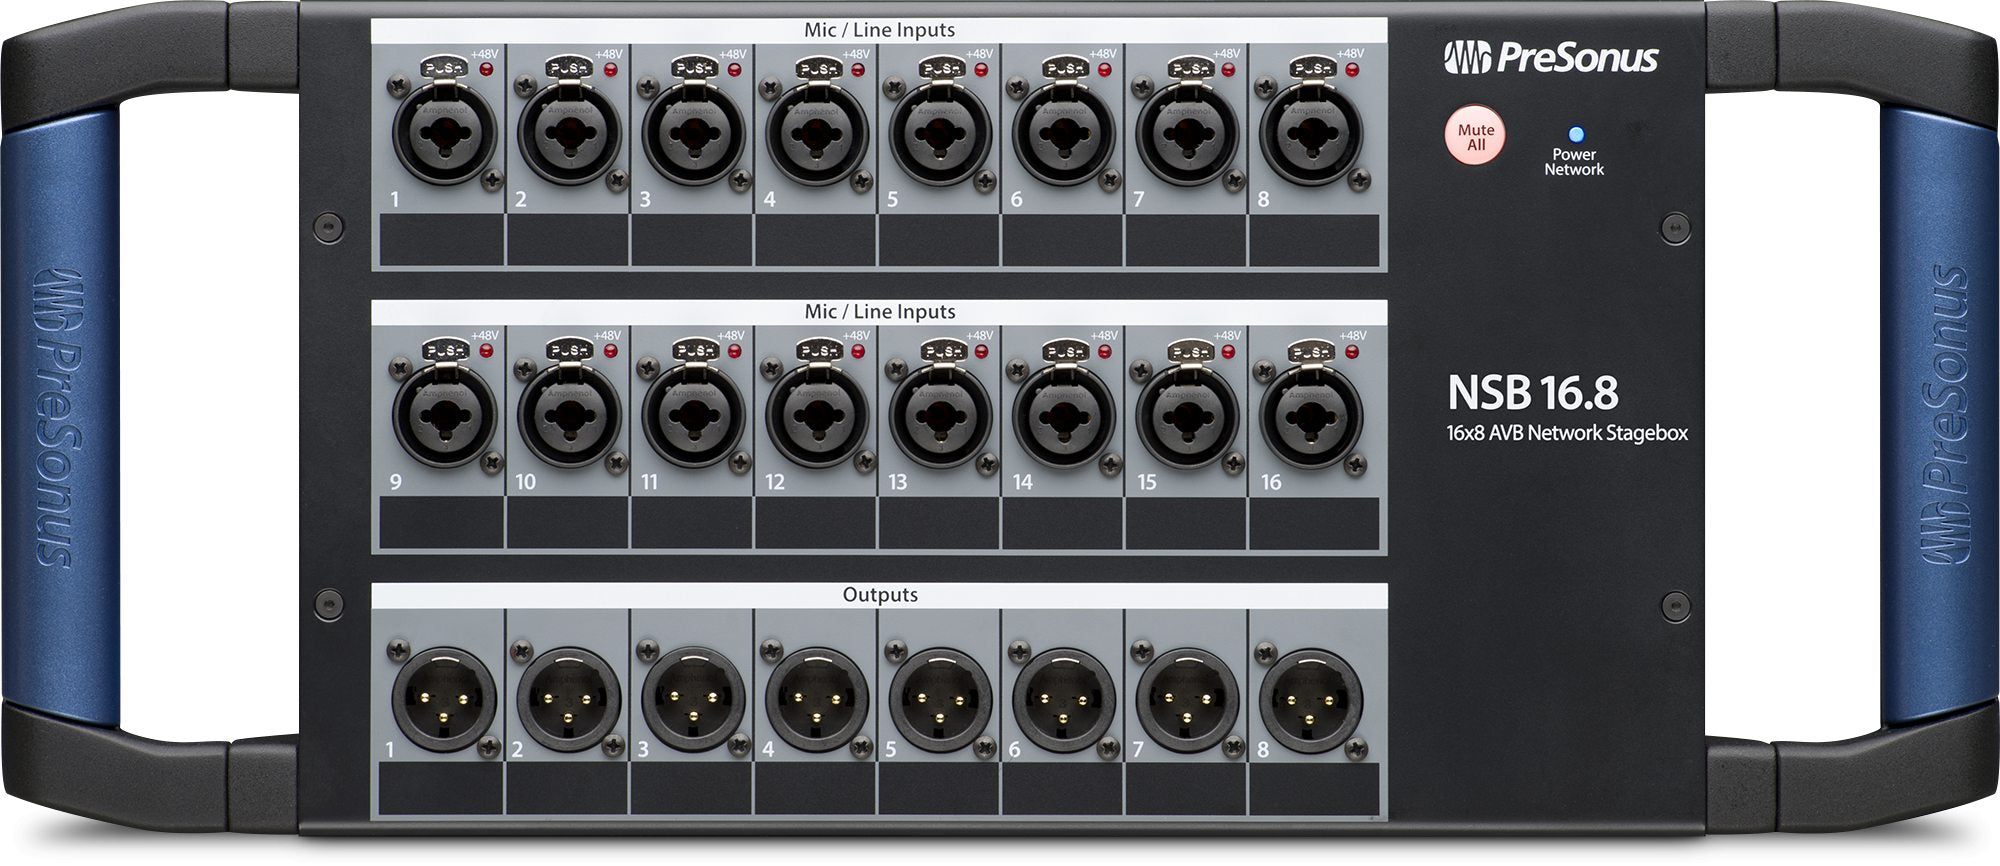 PreSonus NSB 16.8 16X8 AVB Stagebox - Accessories - Professional Audio Design, Inc